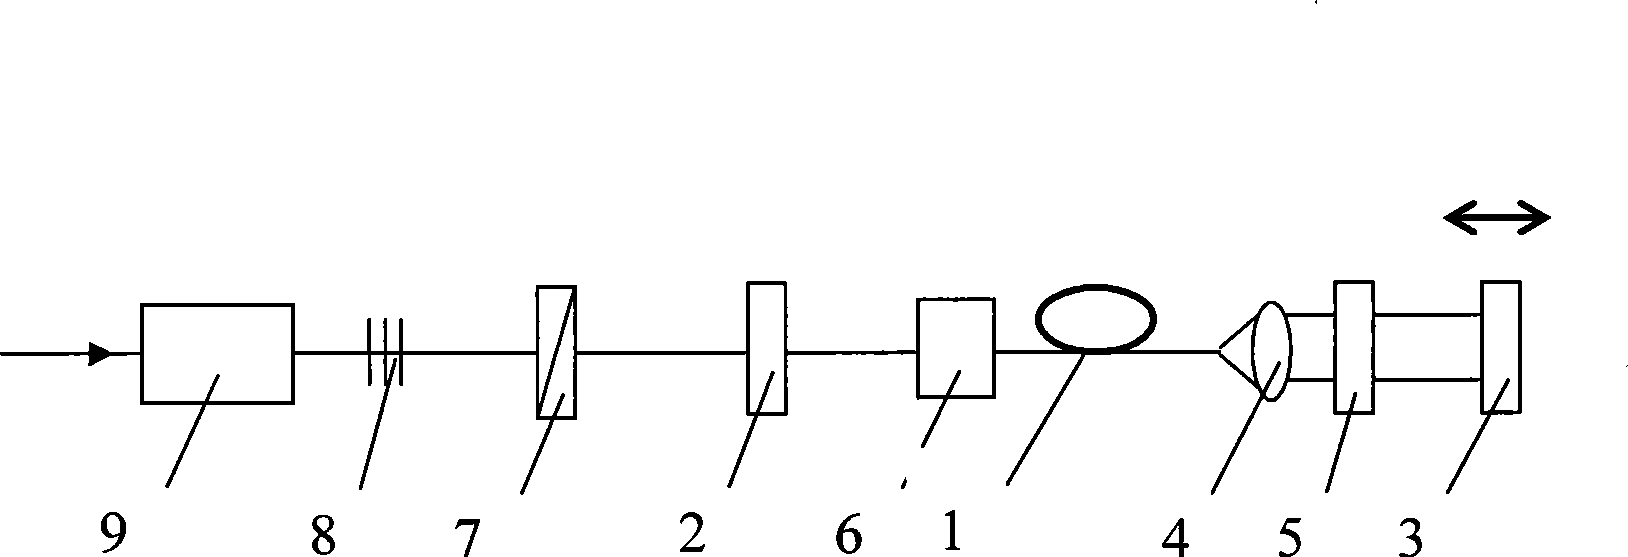 Optically parametric oscillator